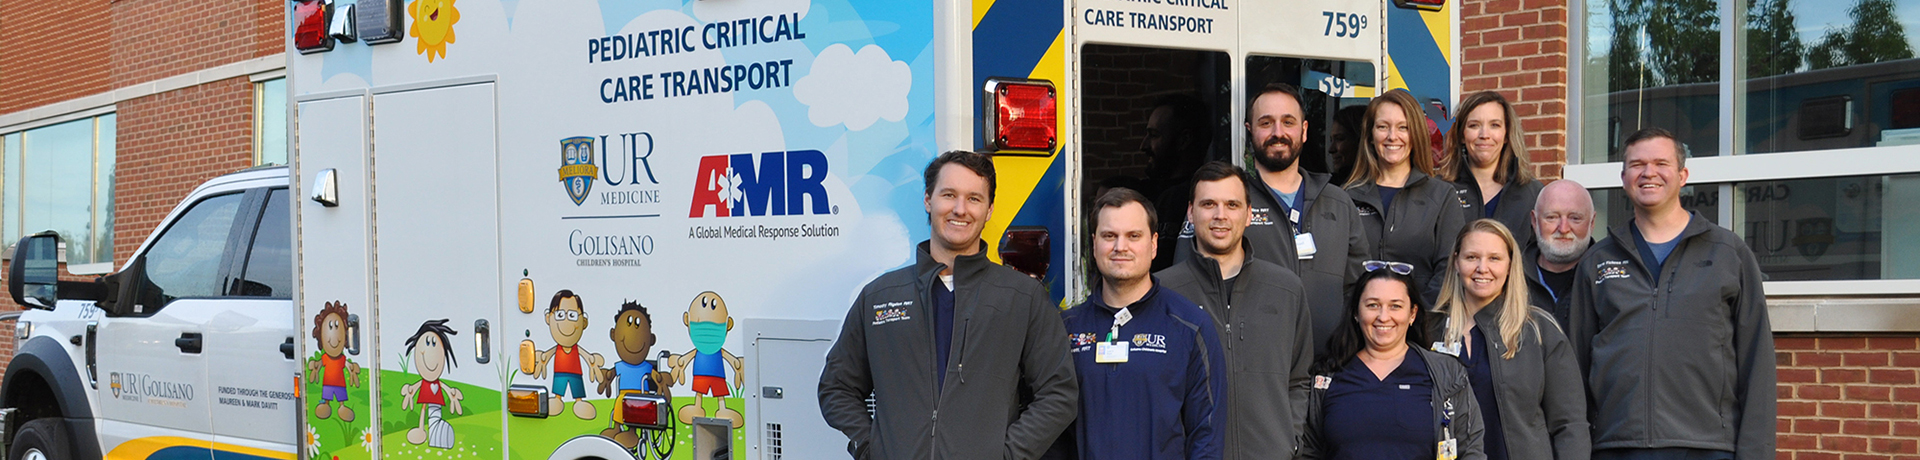 Pediatric Transport Team with New Ambulance